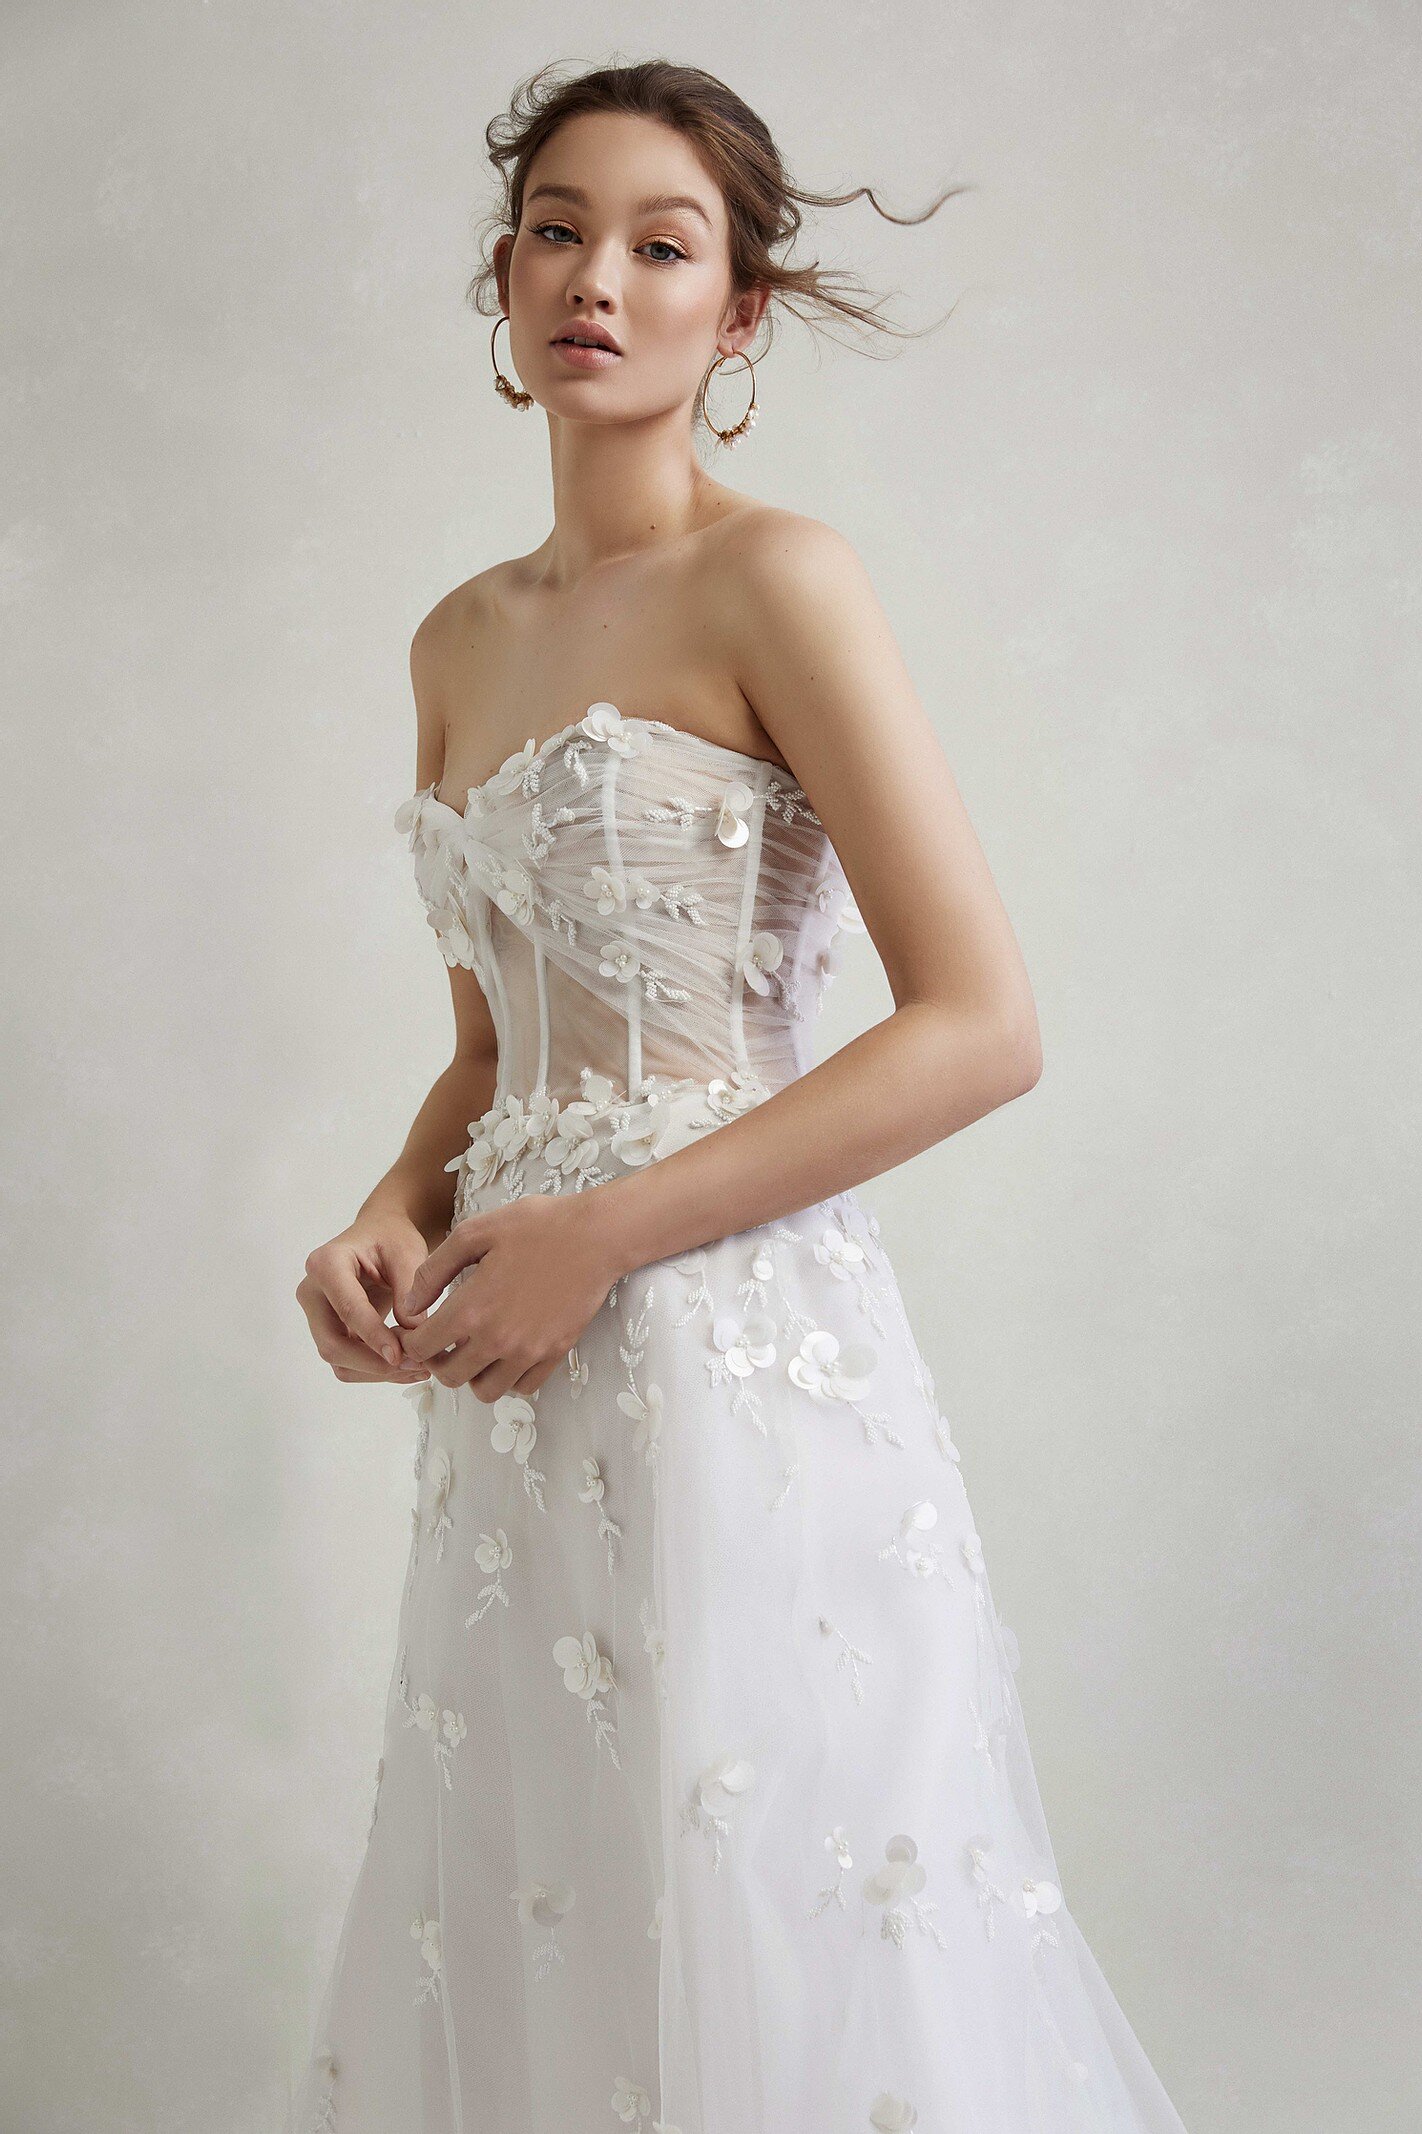 aria-katherine-tash-wedding-dress.jpg